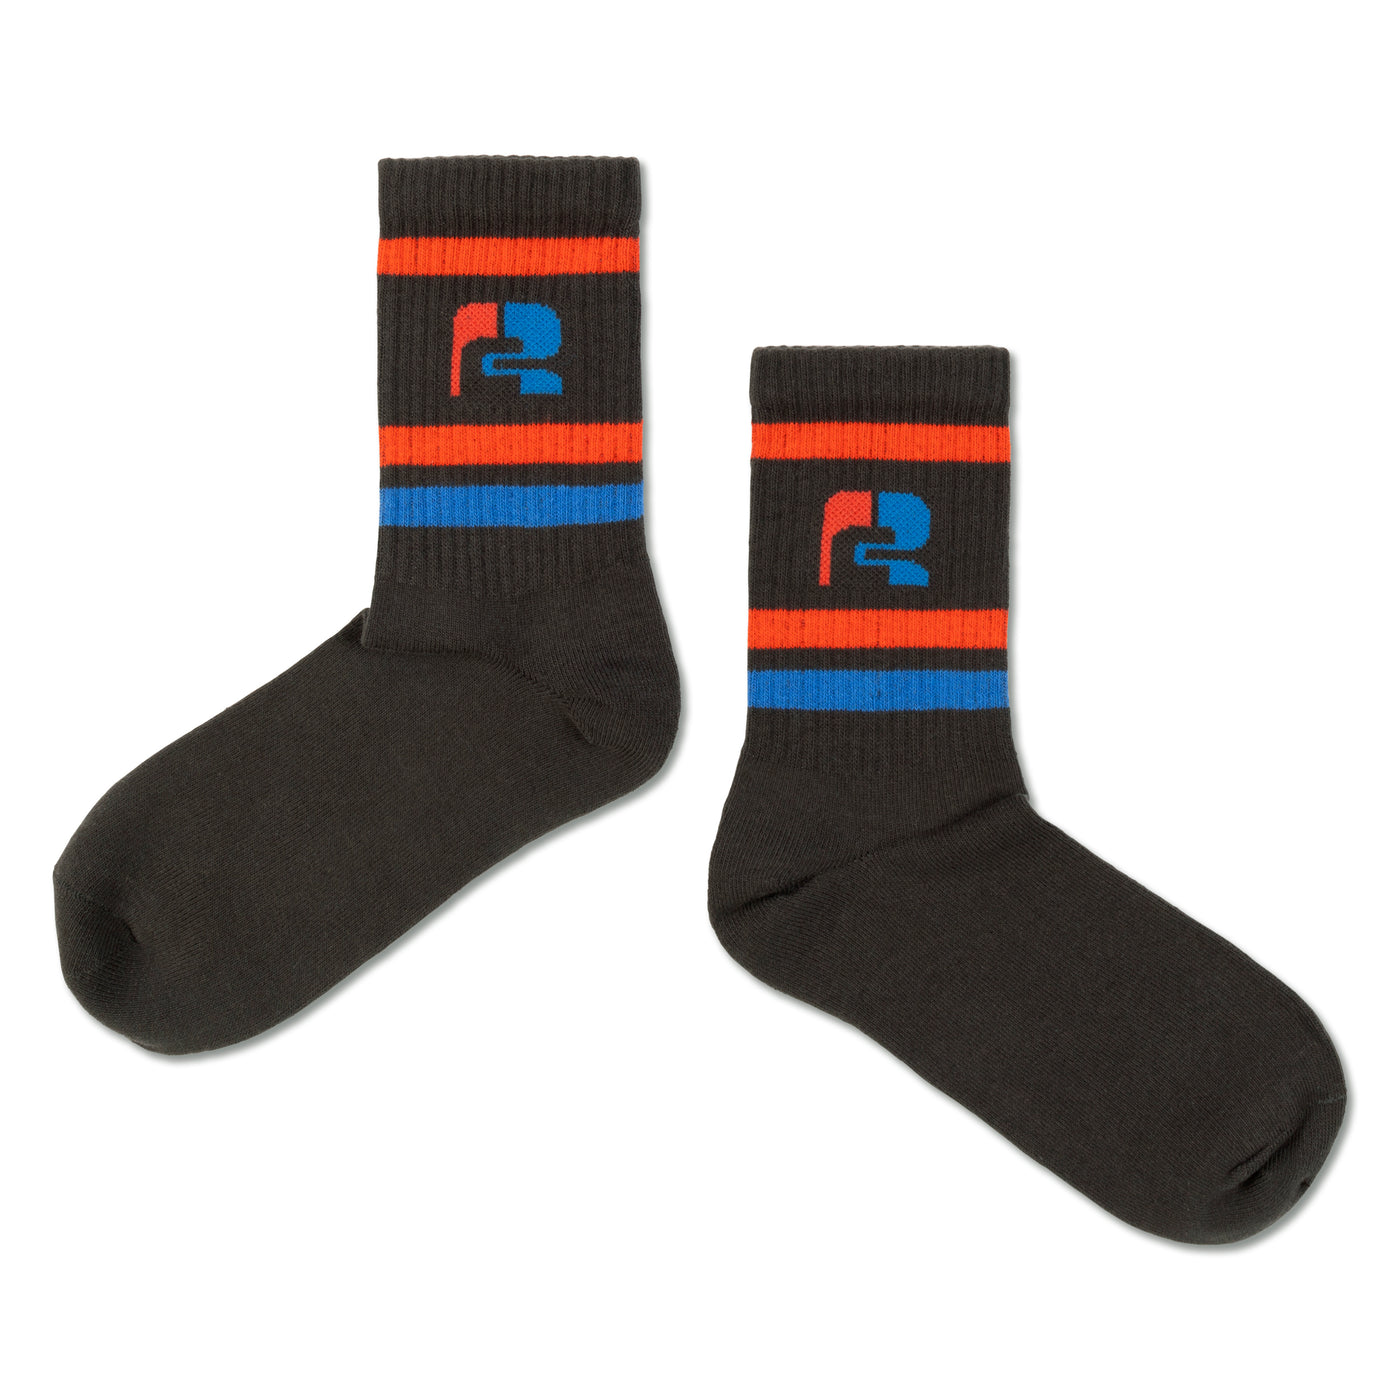 sporty socks - iron blue red logo